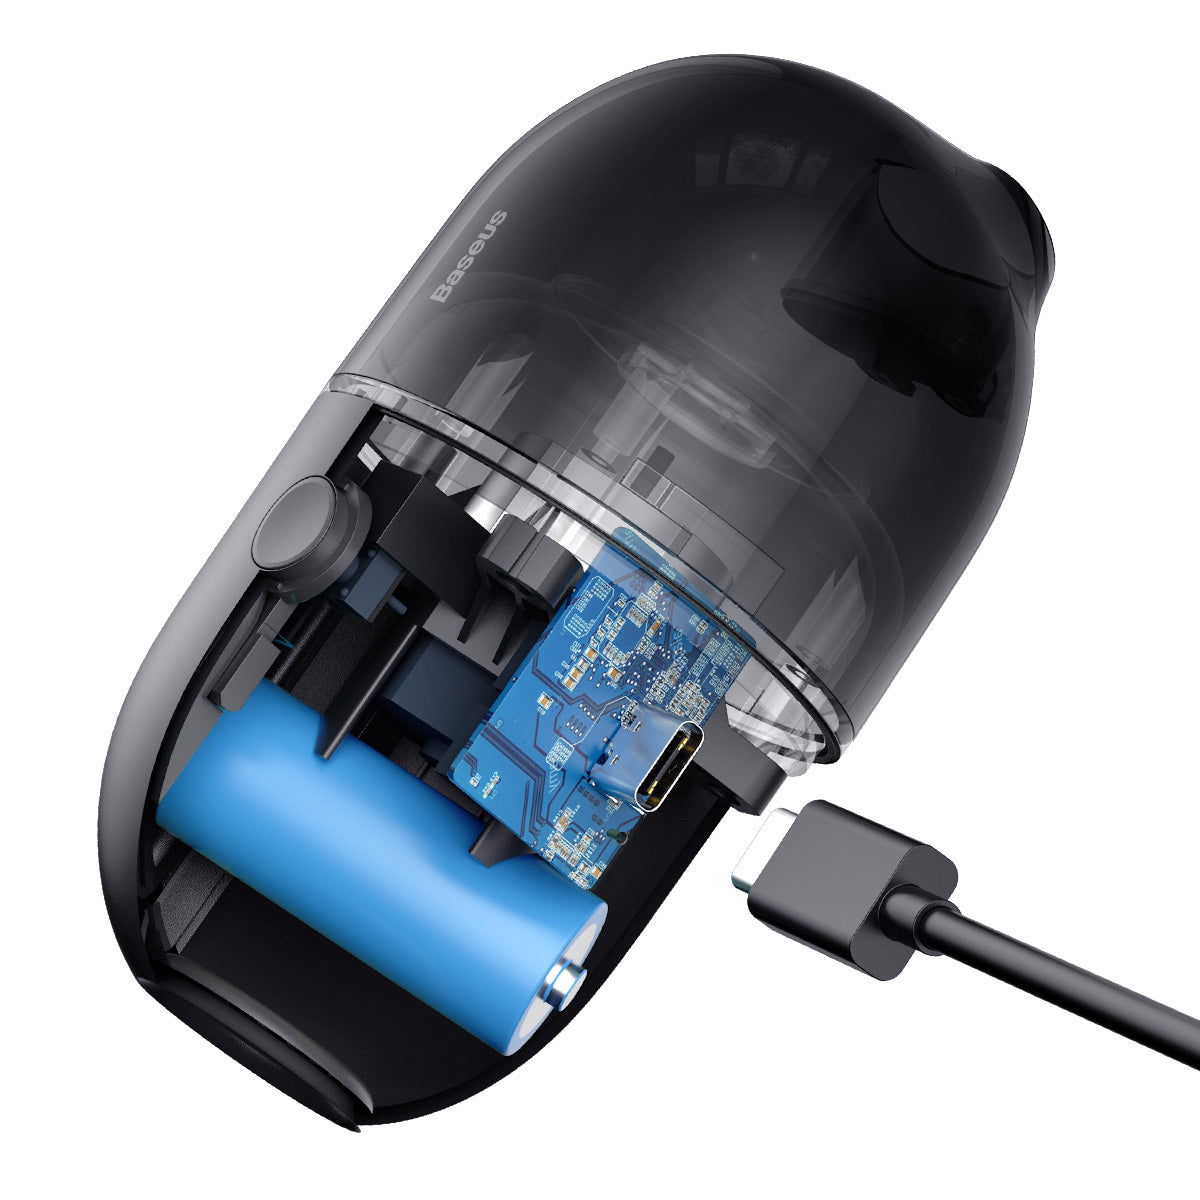 Baseus C2 Desktop Capsule Vacuum Cleaner Black